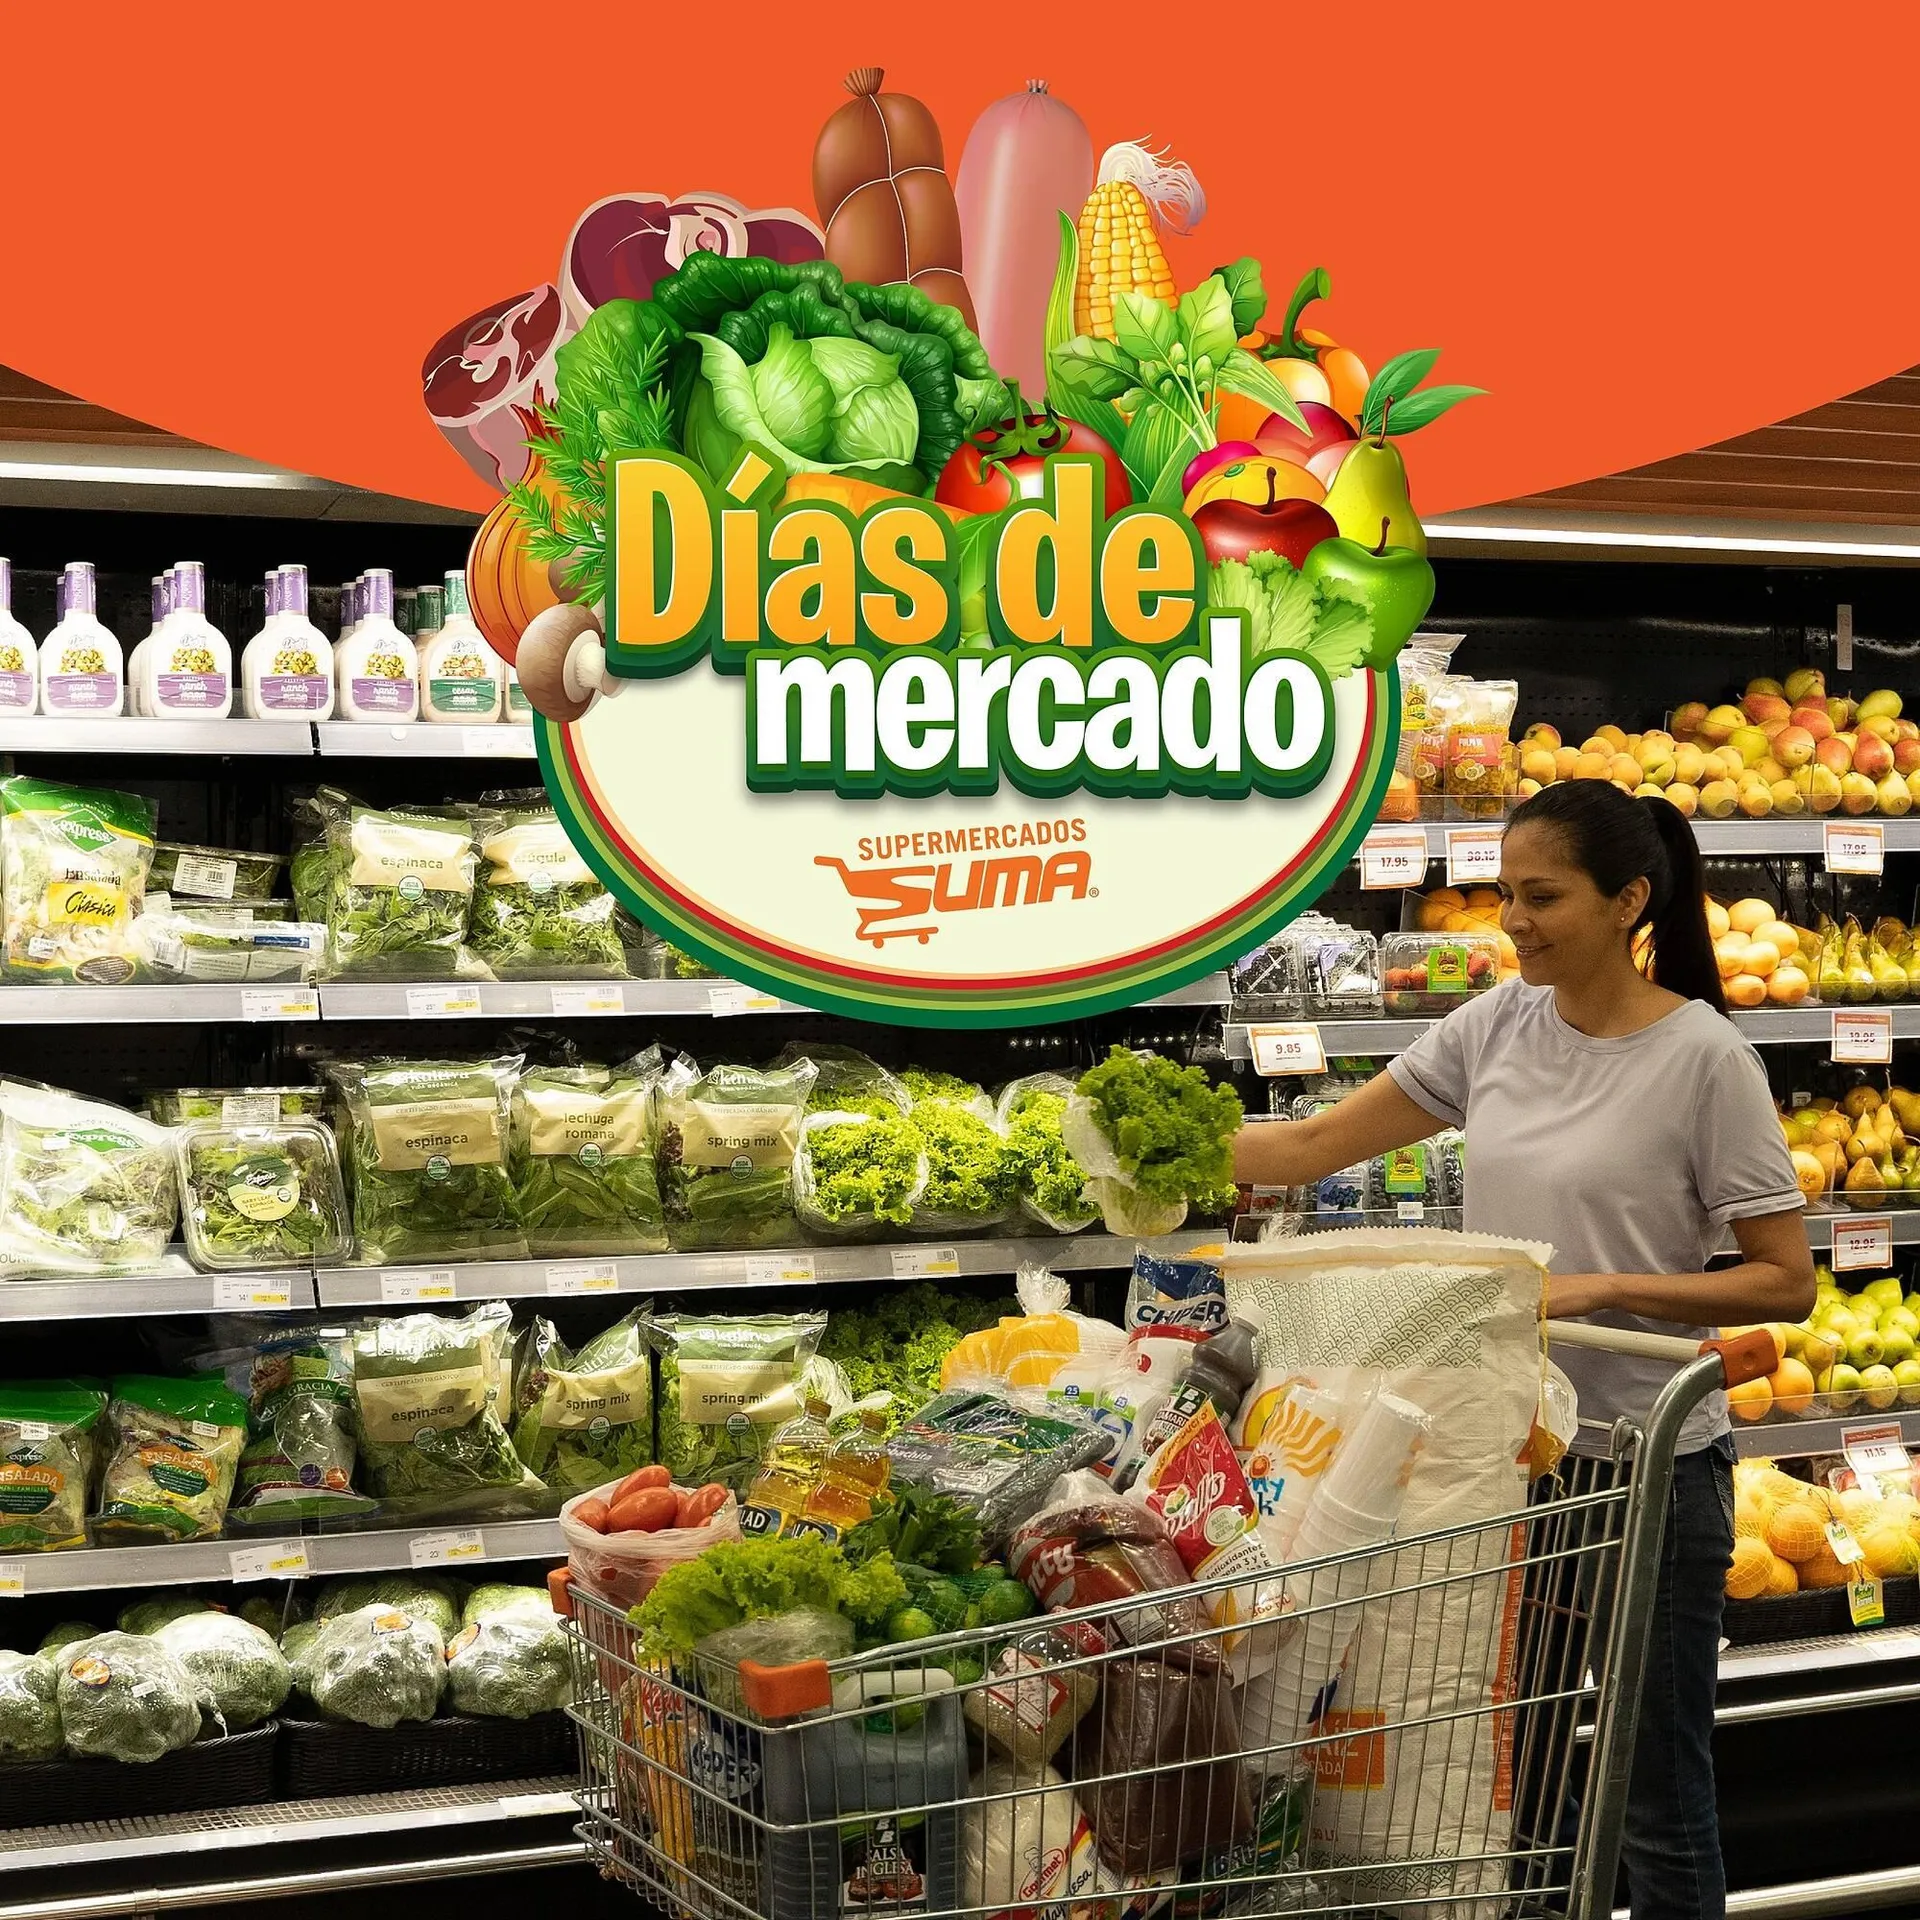 Folleto Suma Supermercados - 1